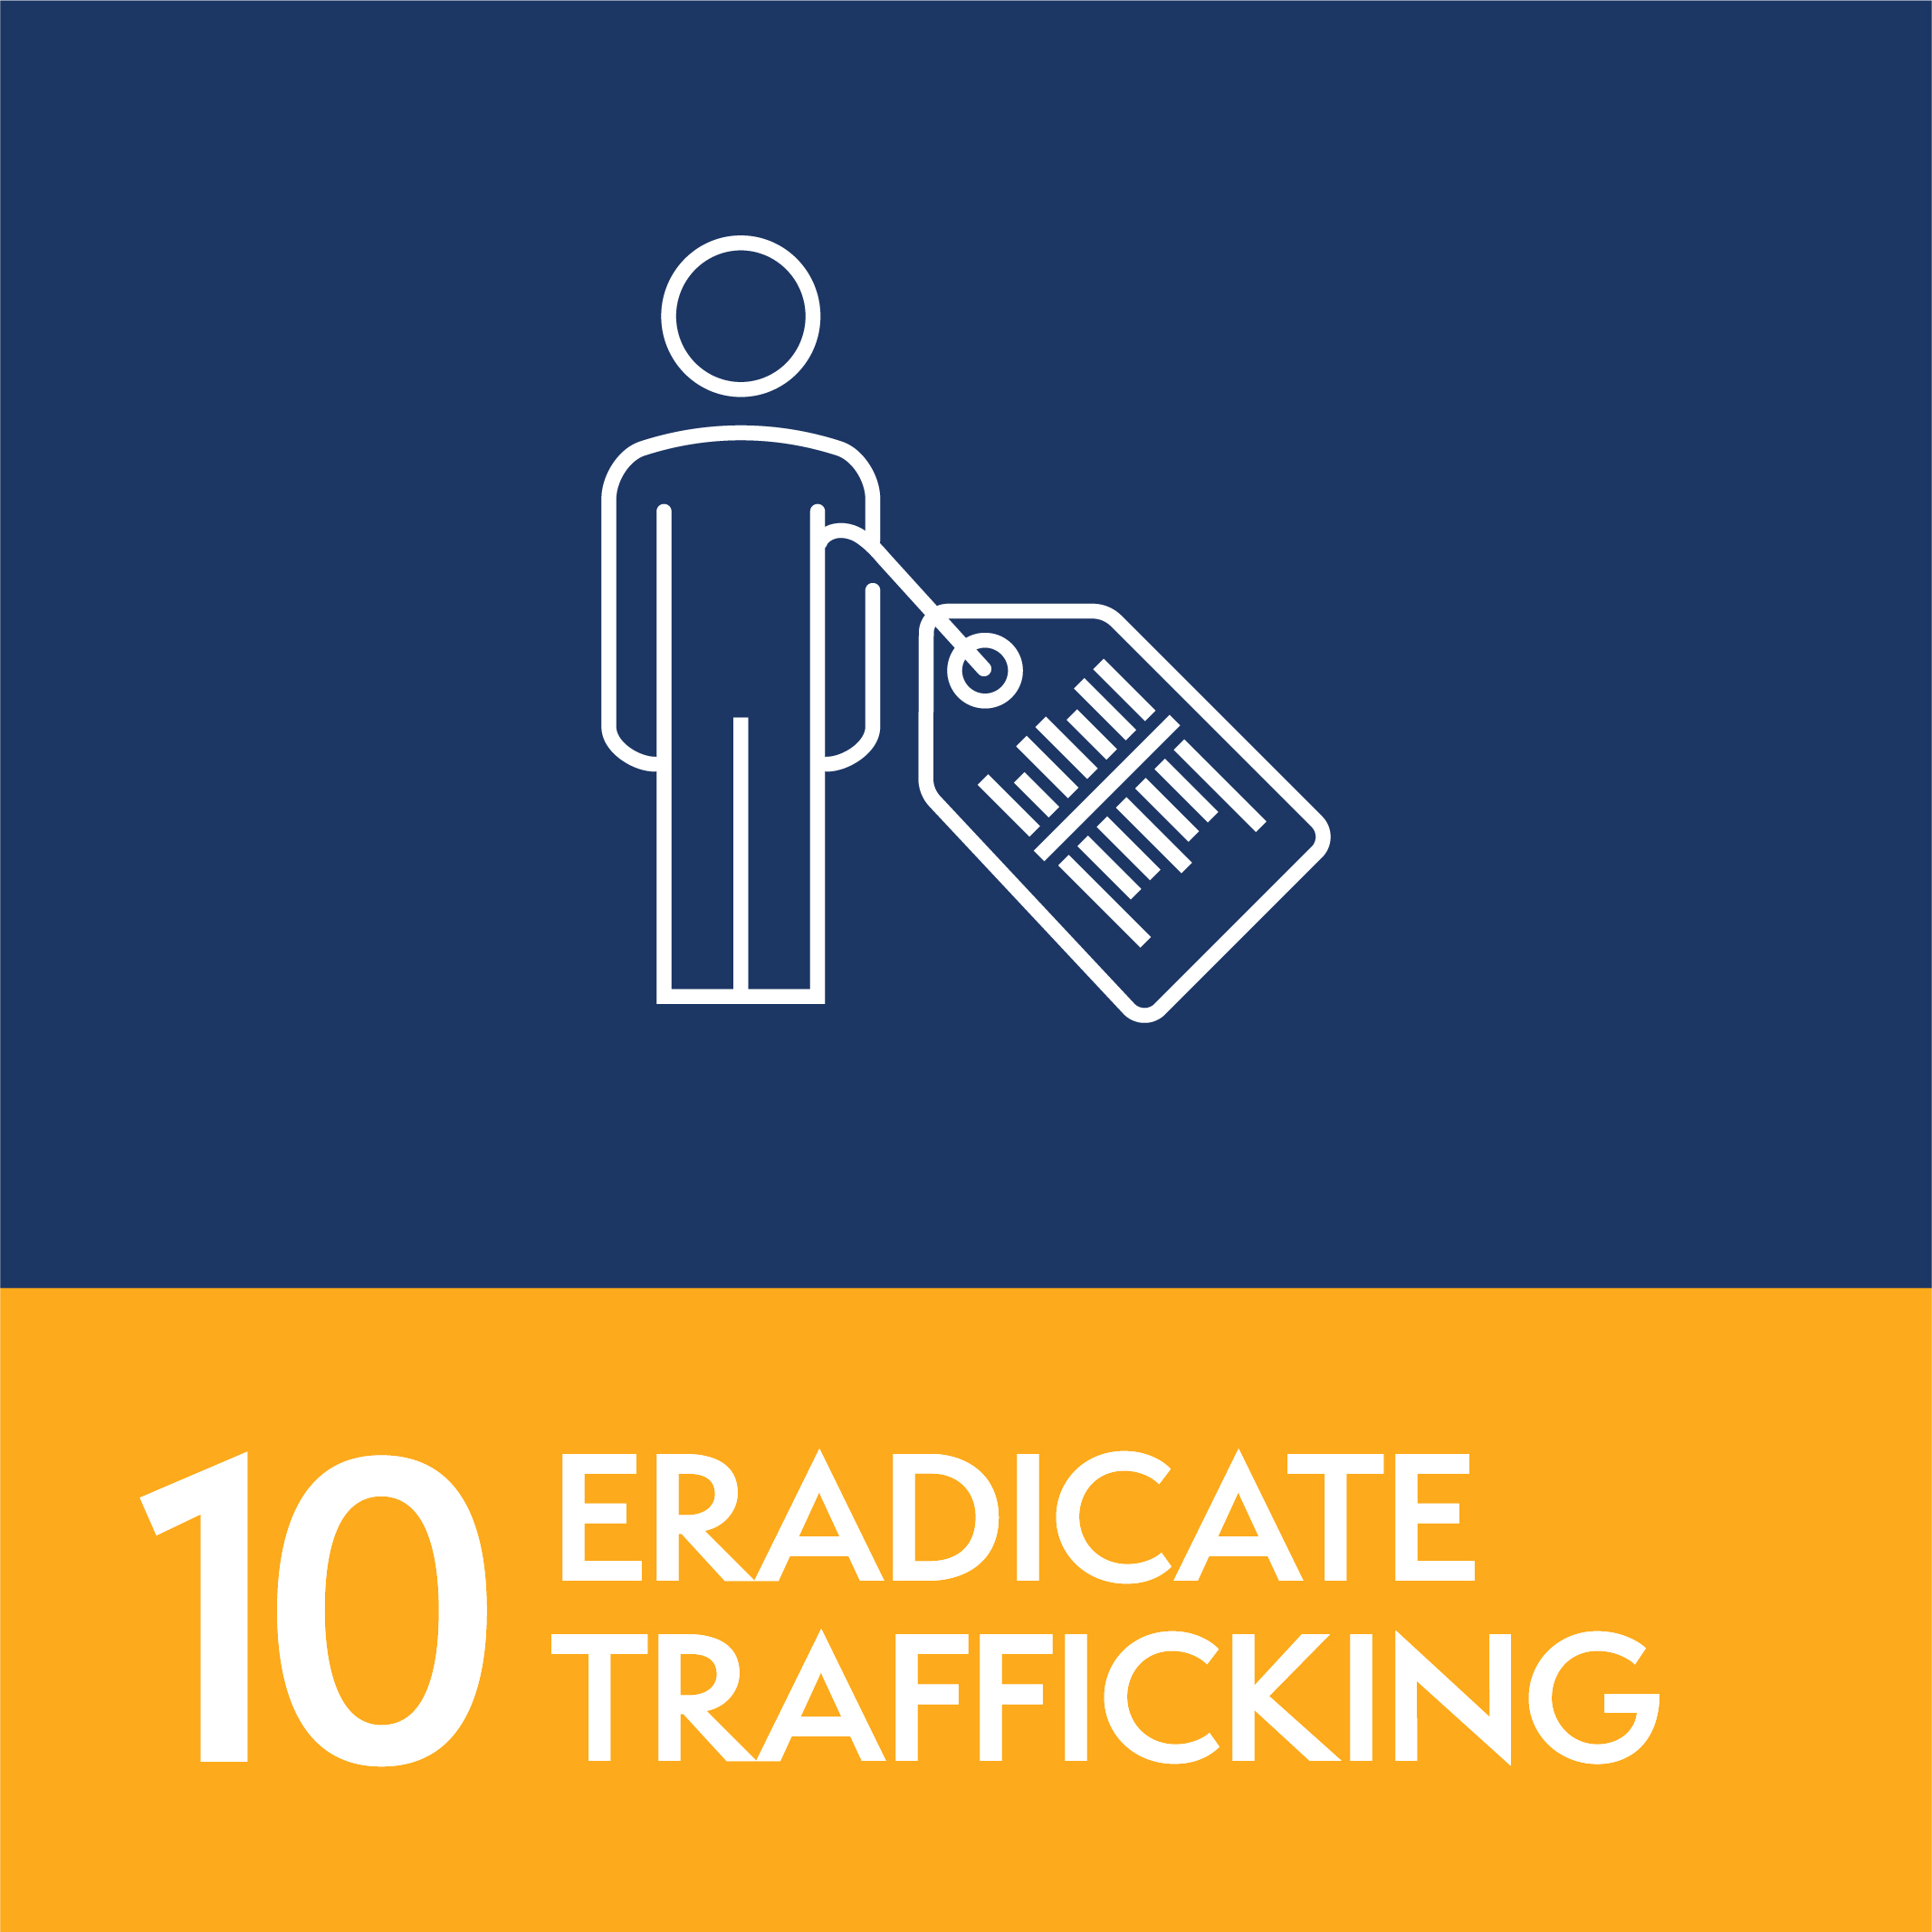 10 - Erradicate trafficking